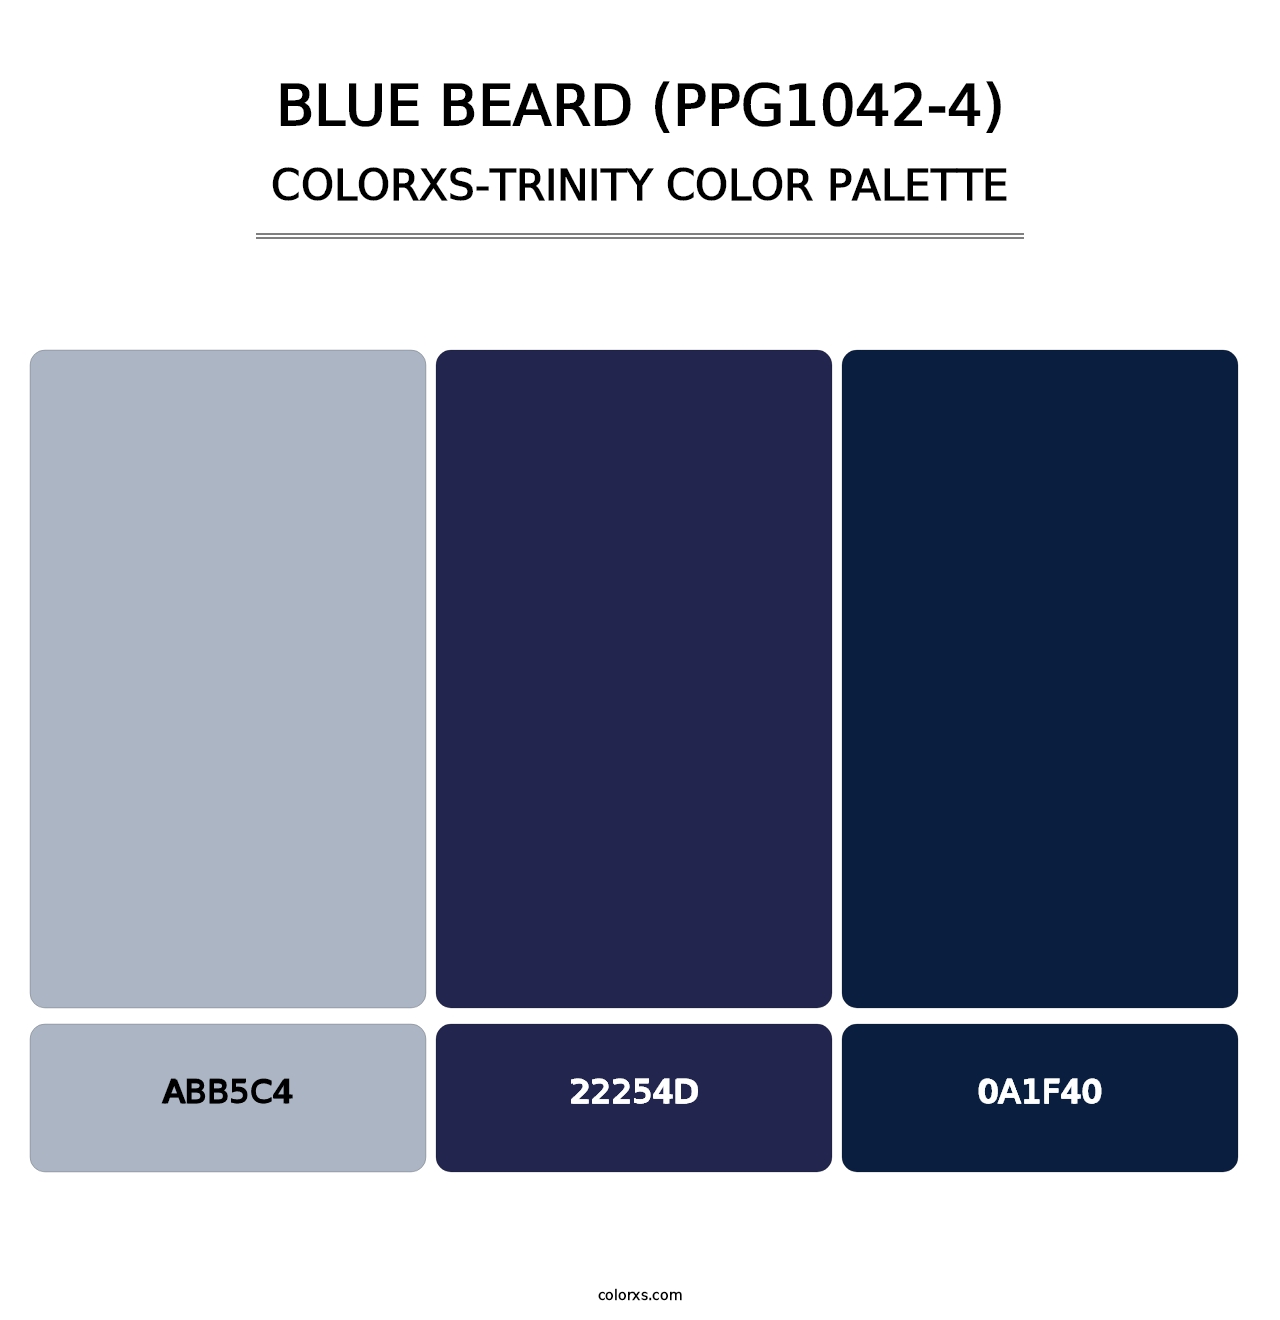 Blue Beard (PPG1042-4) - Colorxs Trinity Palette